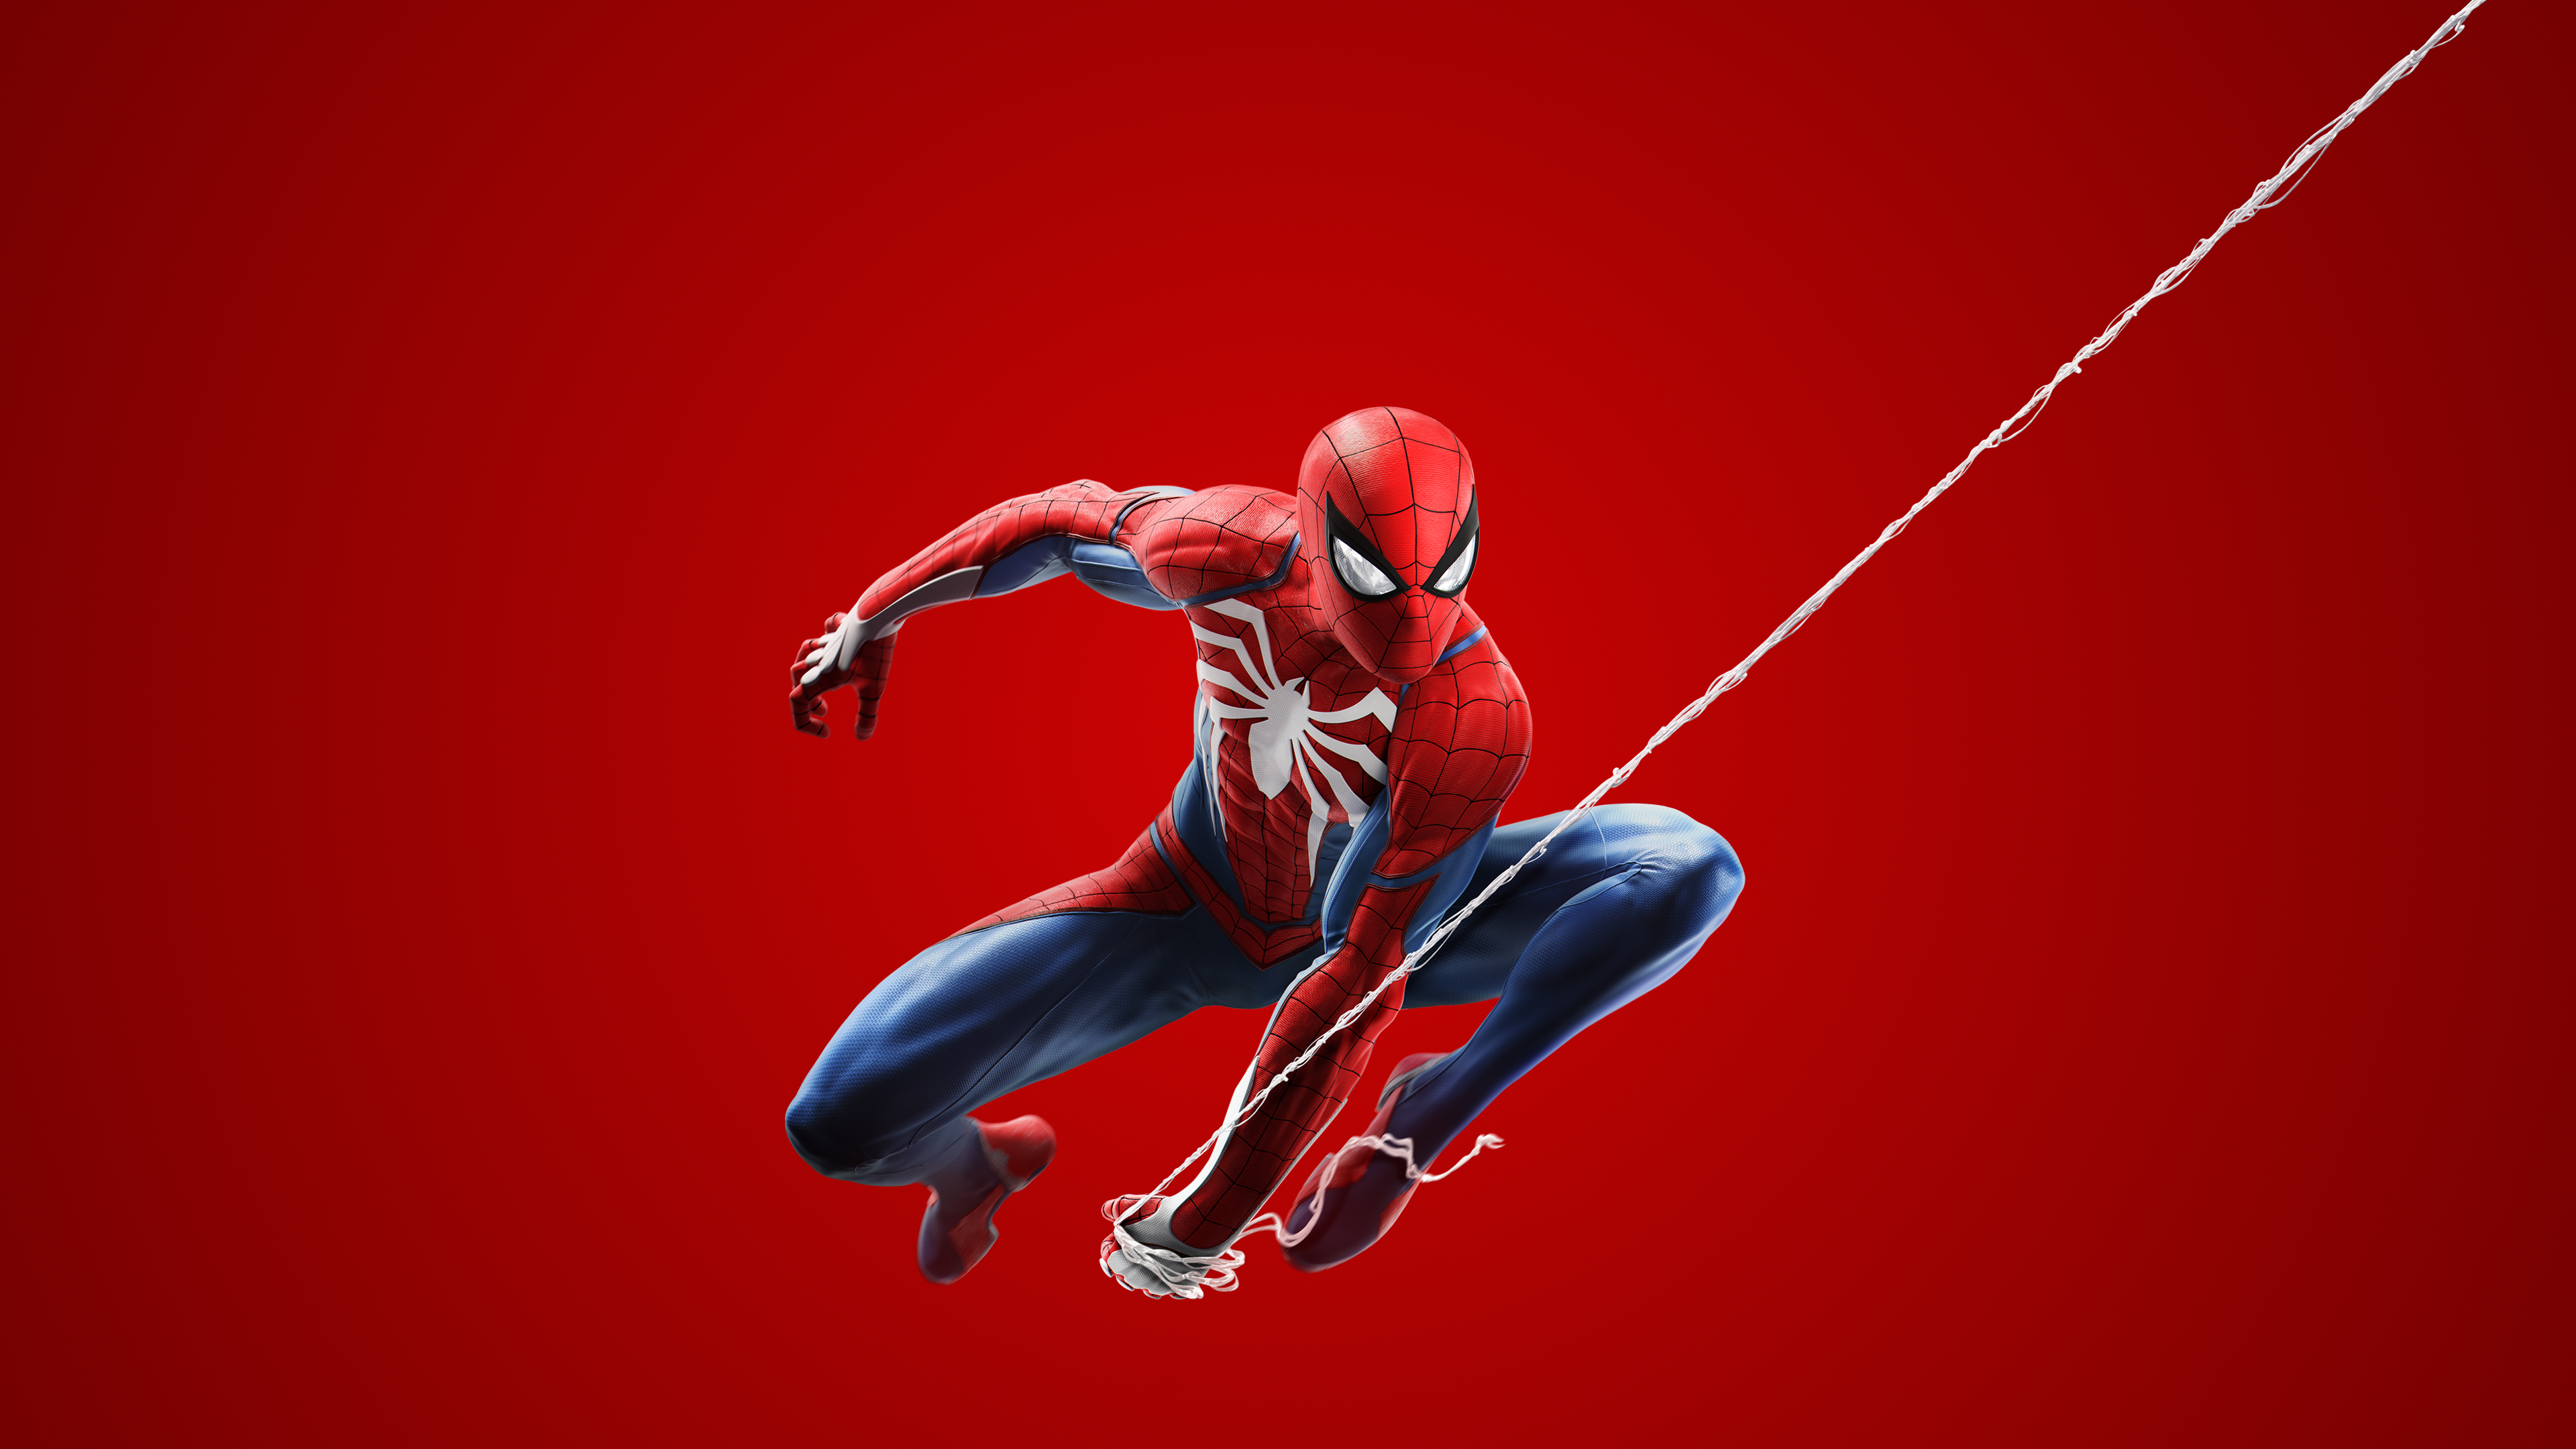 Image] Spider-Man PS4 - 4K Wallpaper : r/PS4